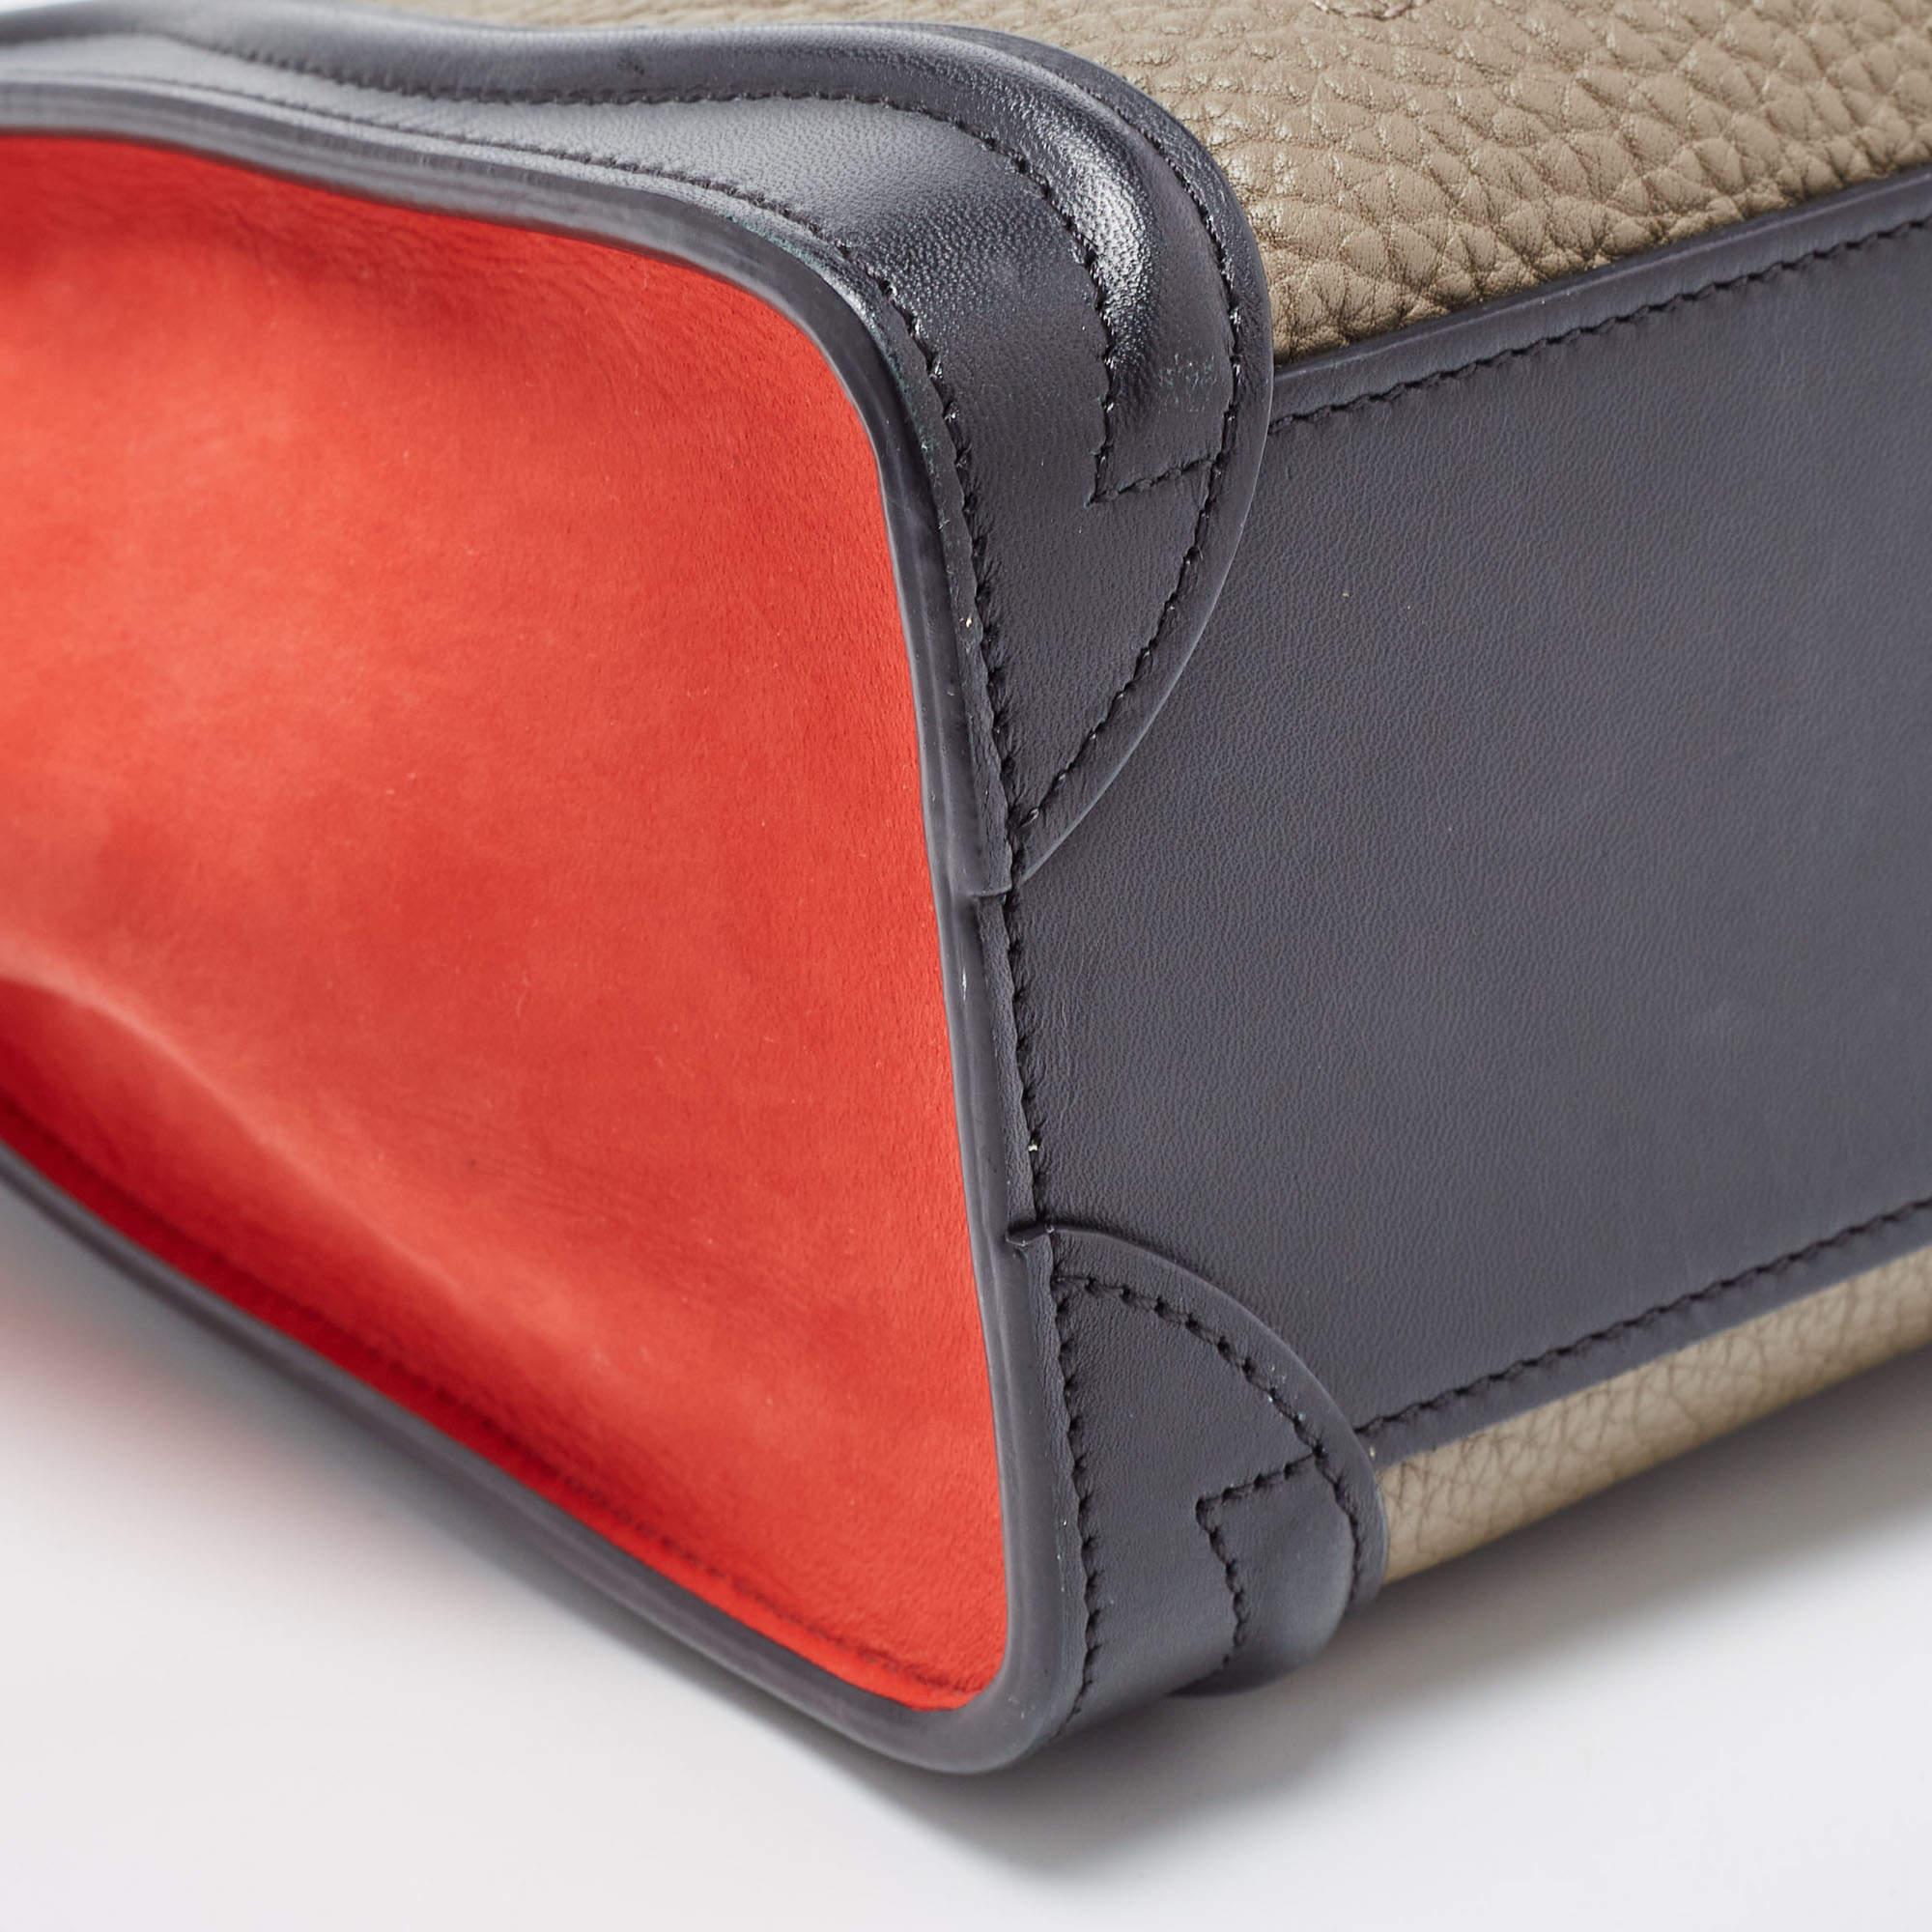 Celine Tri Color Leather and Nubuck Nano Luggage Tote For Sale 8